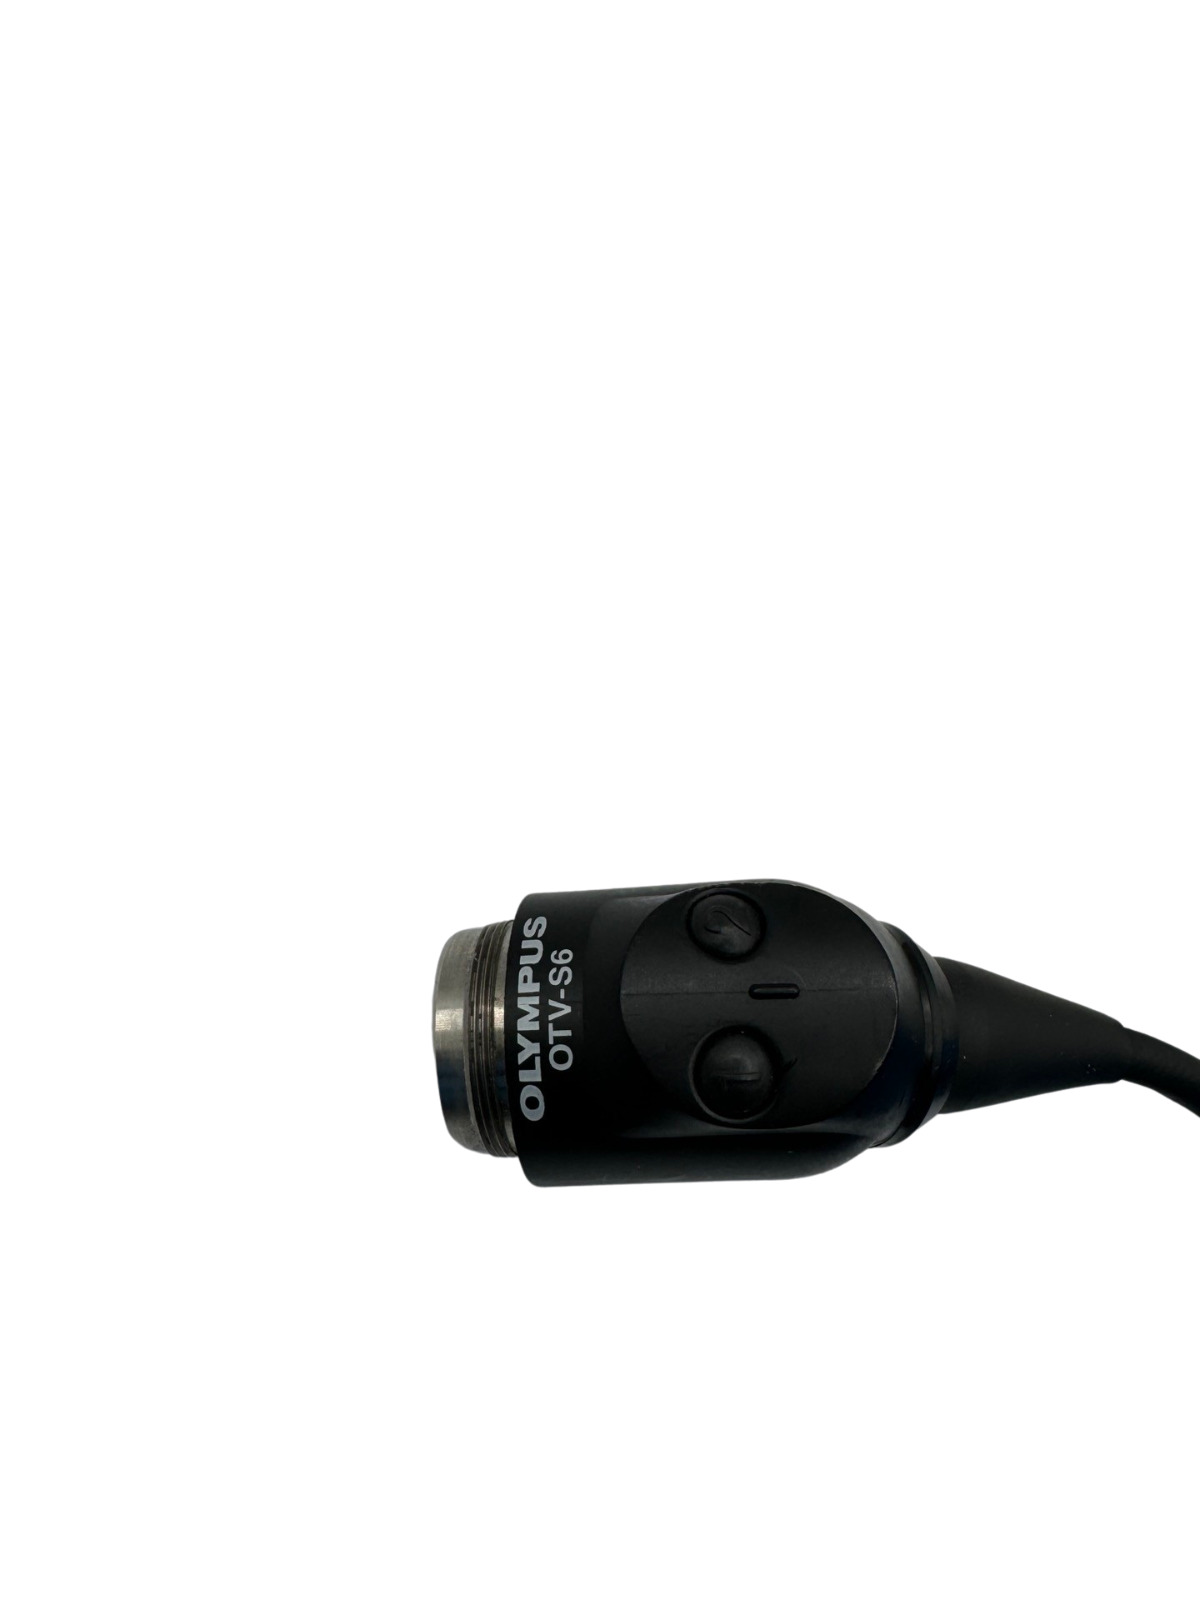 Olympus Autoclaveable Urology Camera Head OTV-S6